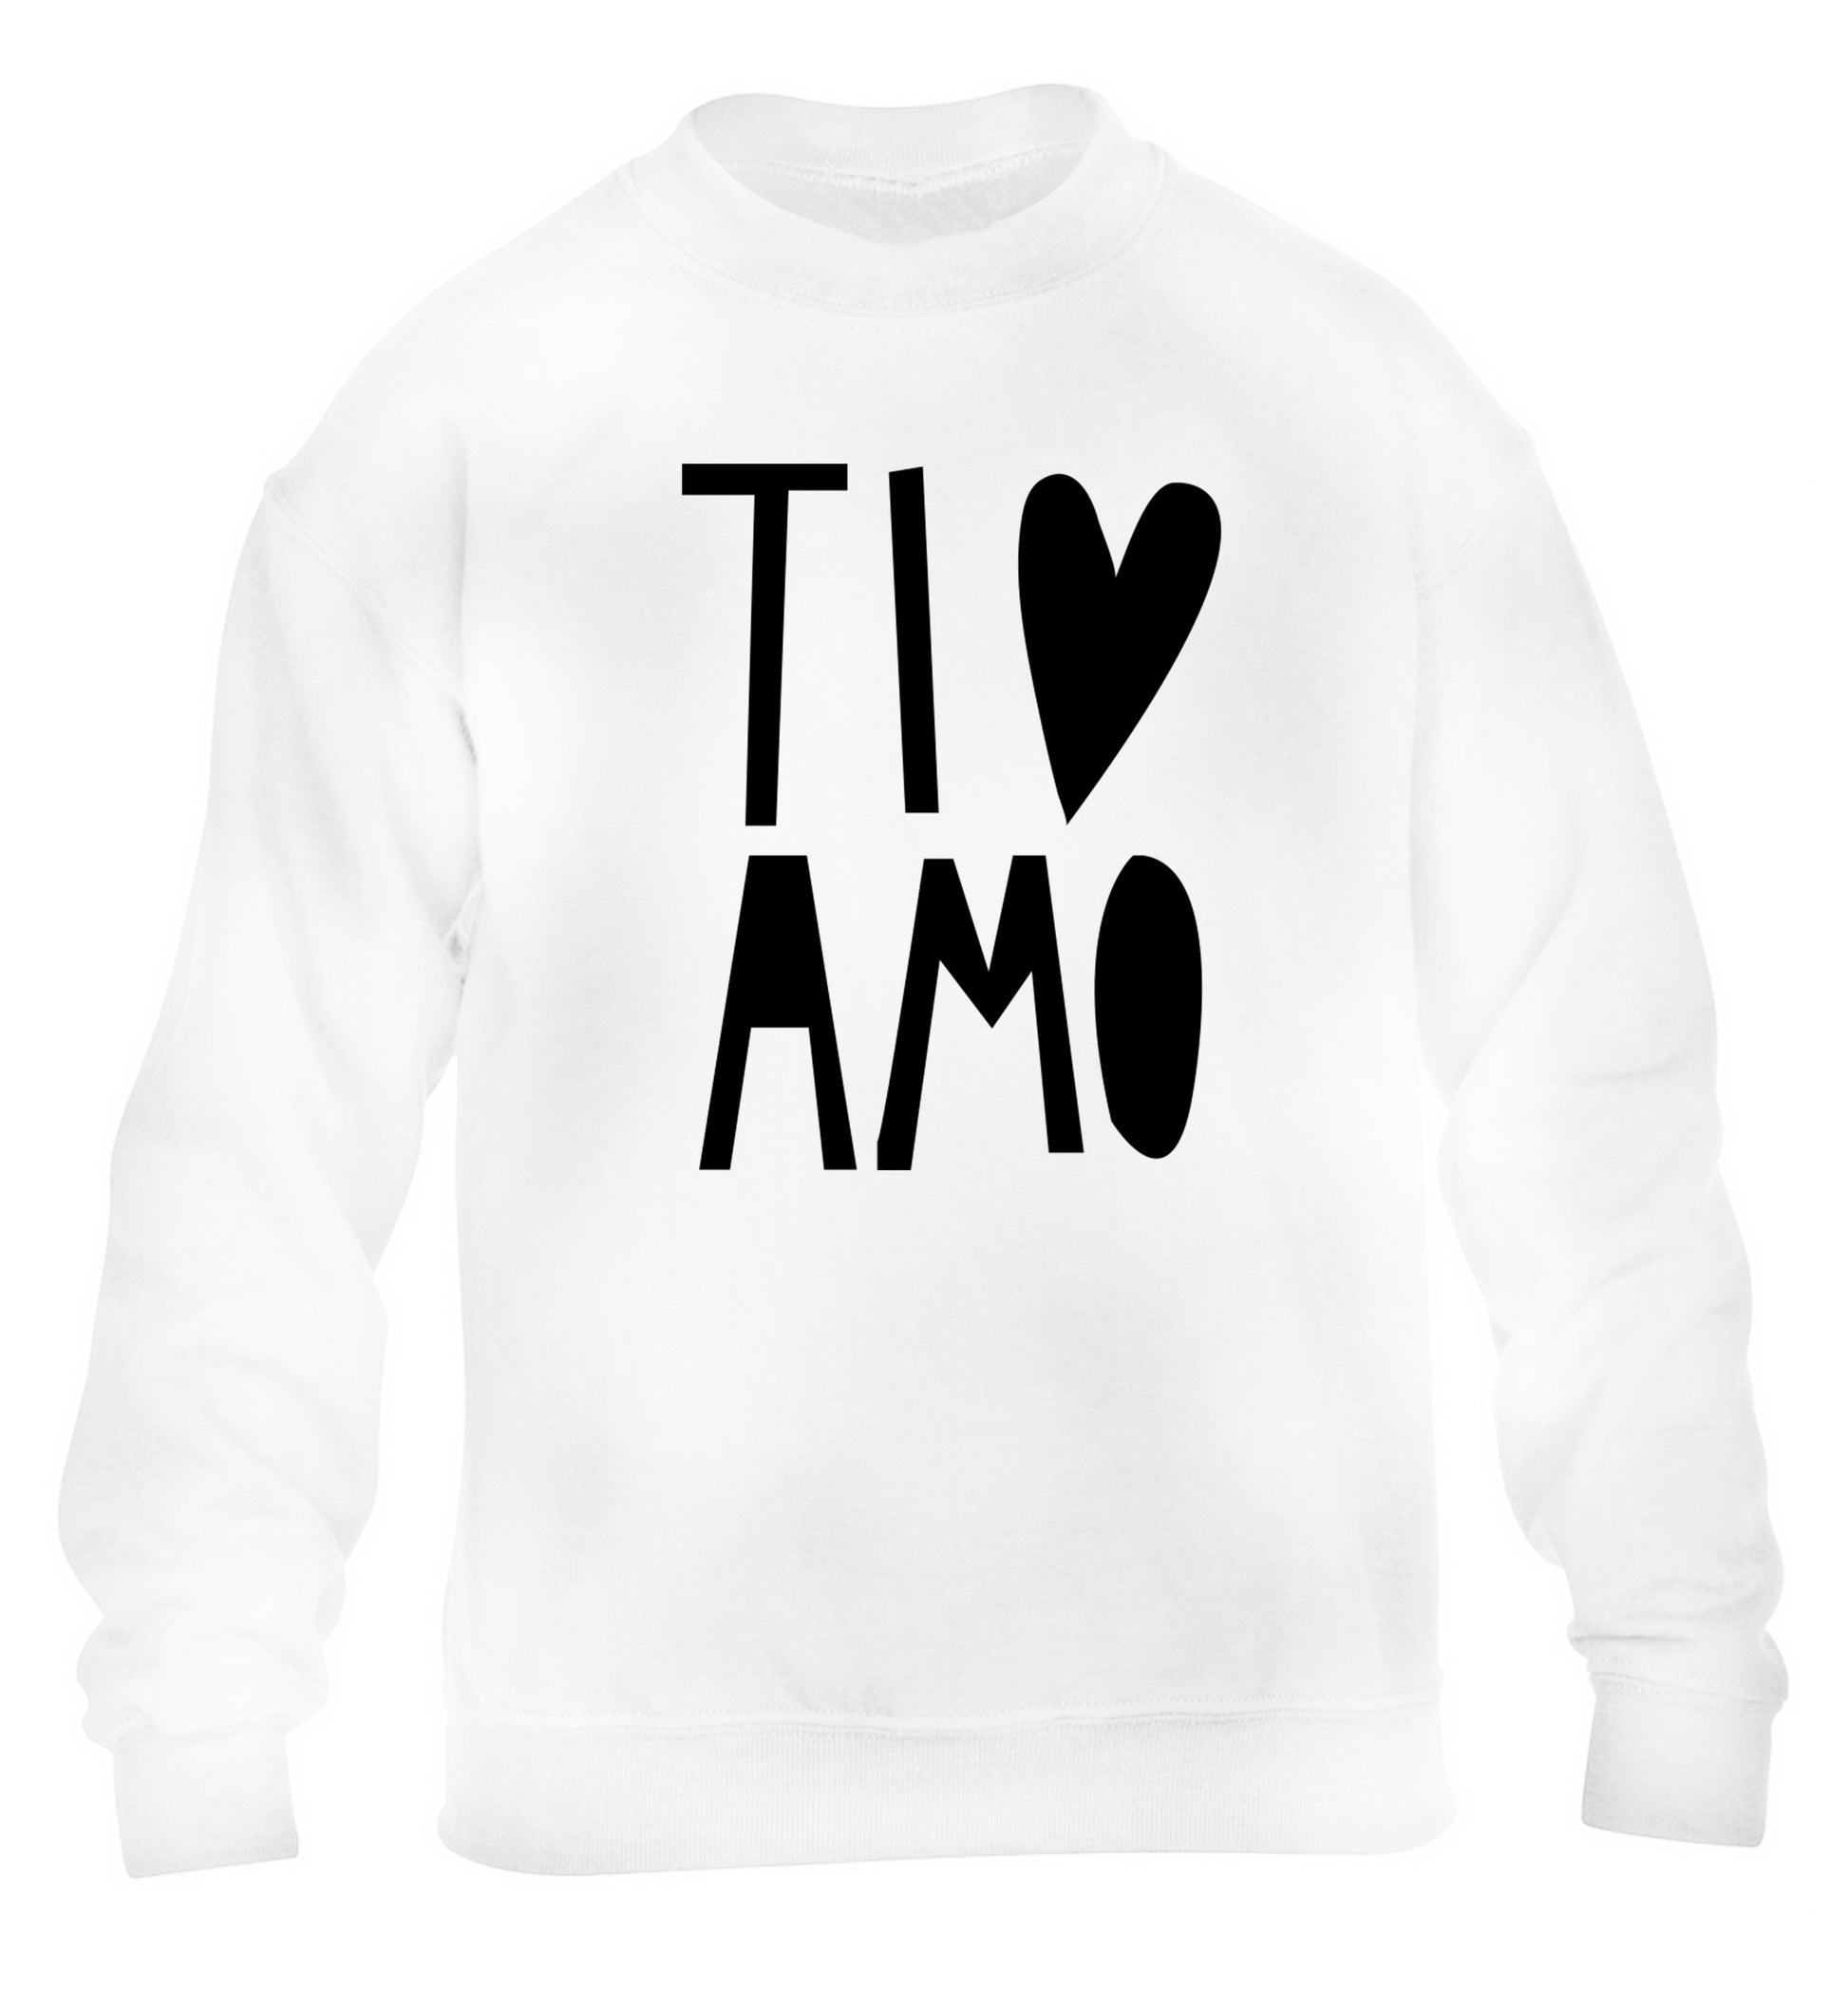 Ti amo - I love you children's white sweater 12-13 Years